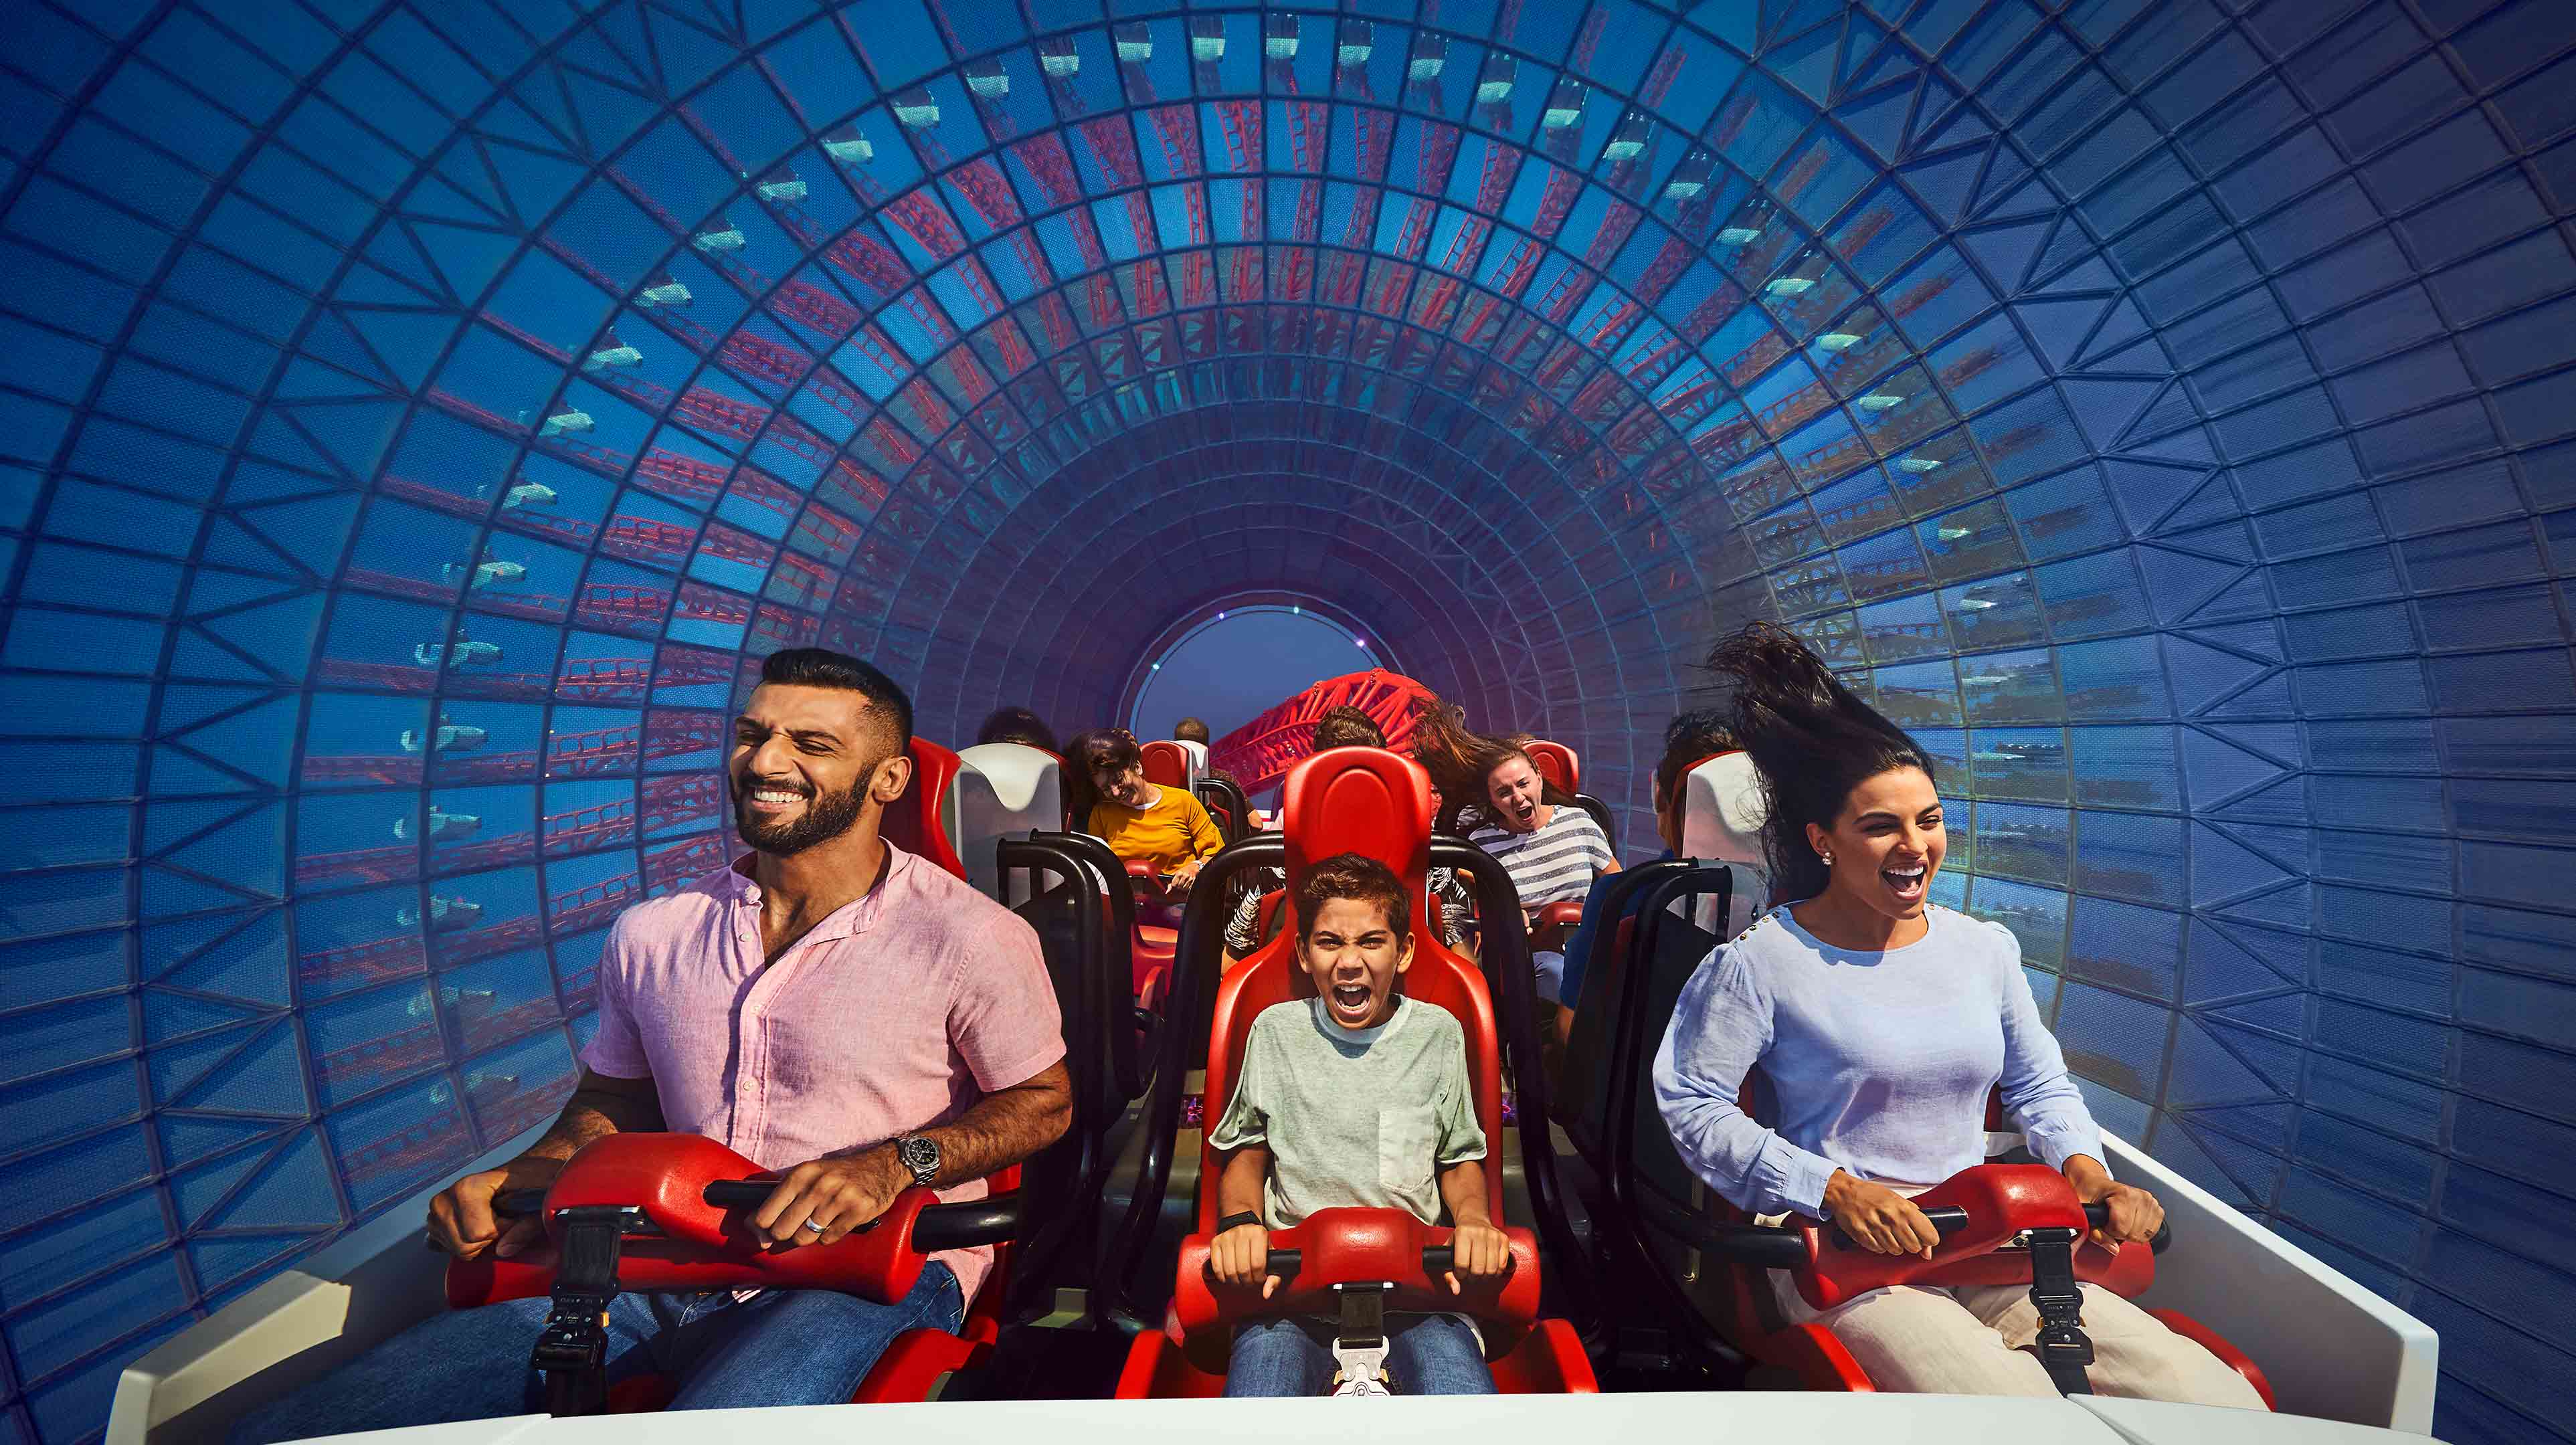 Family of three enjoying their time on a rollercoaster in Abu Dhabi